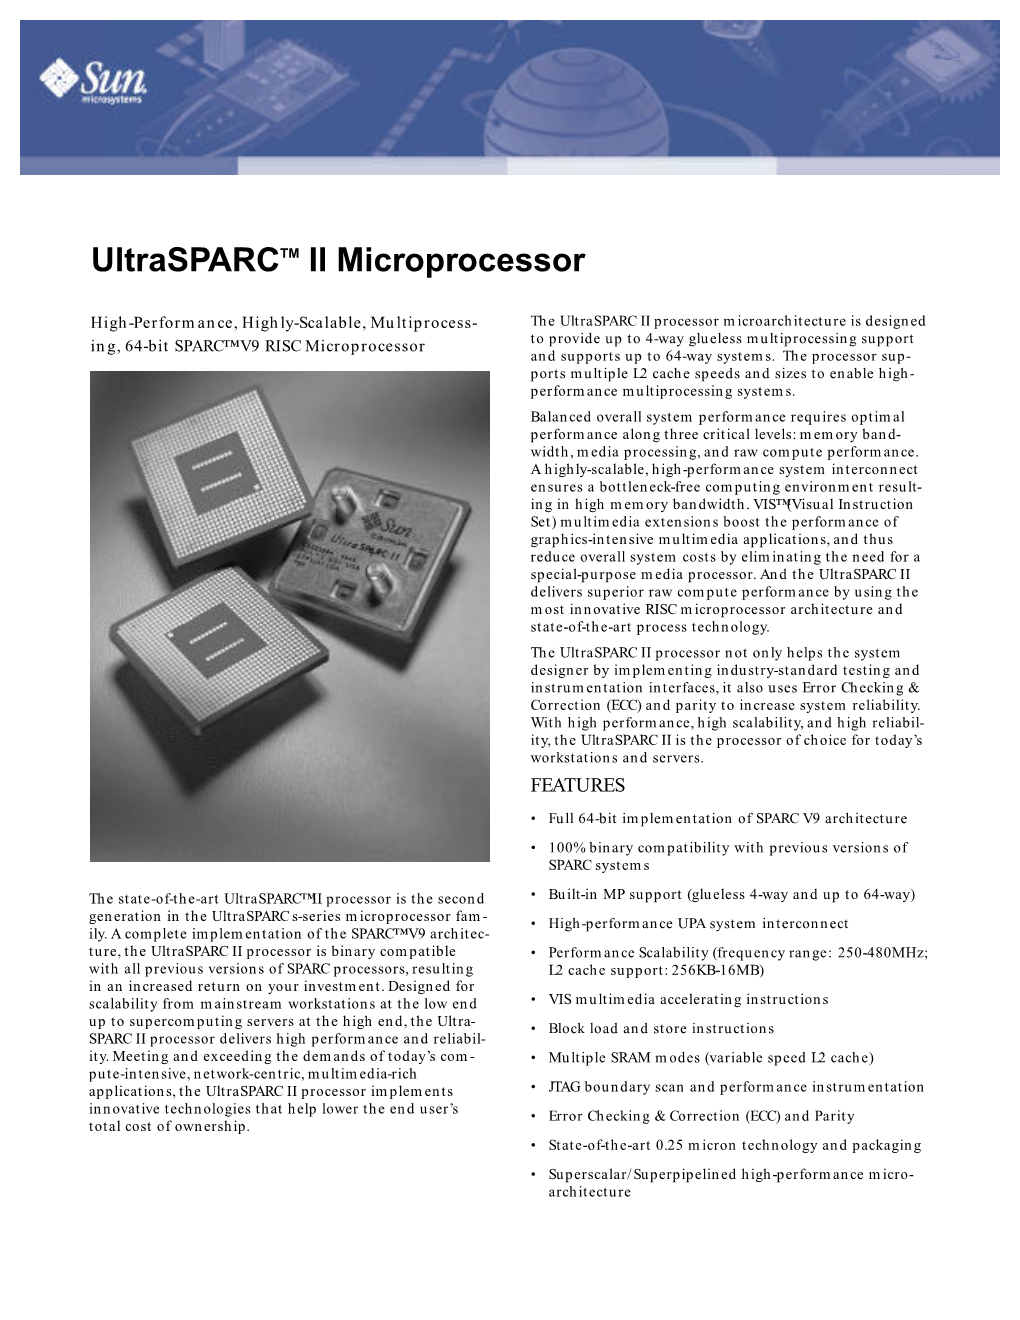 Ultrasparctm II Microprocessor